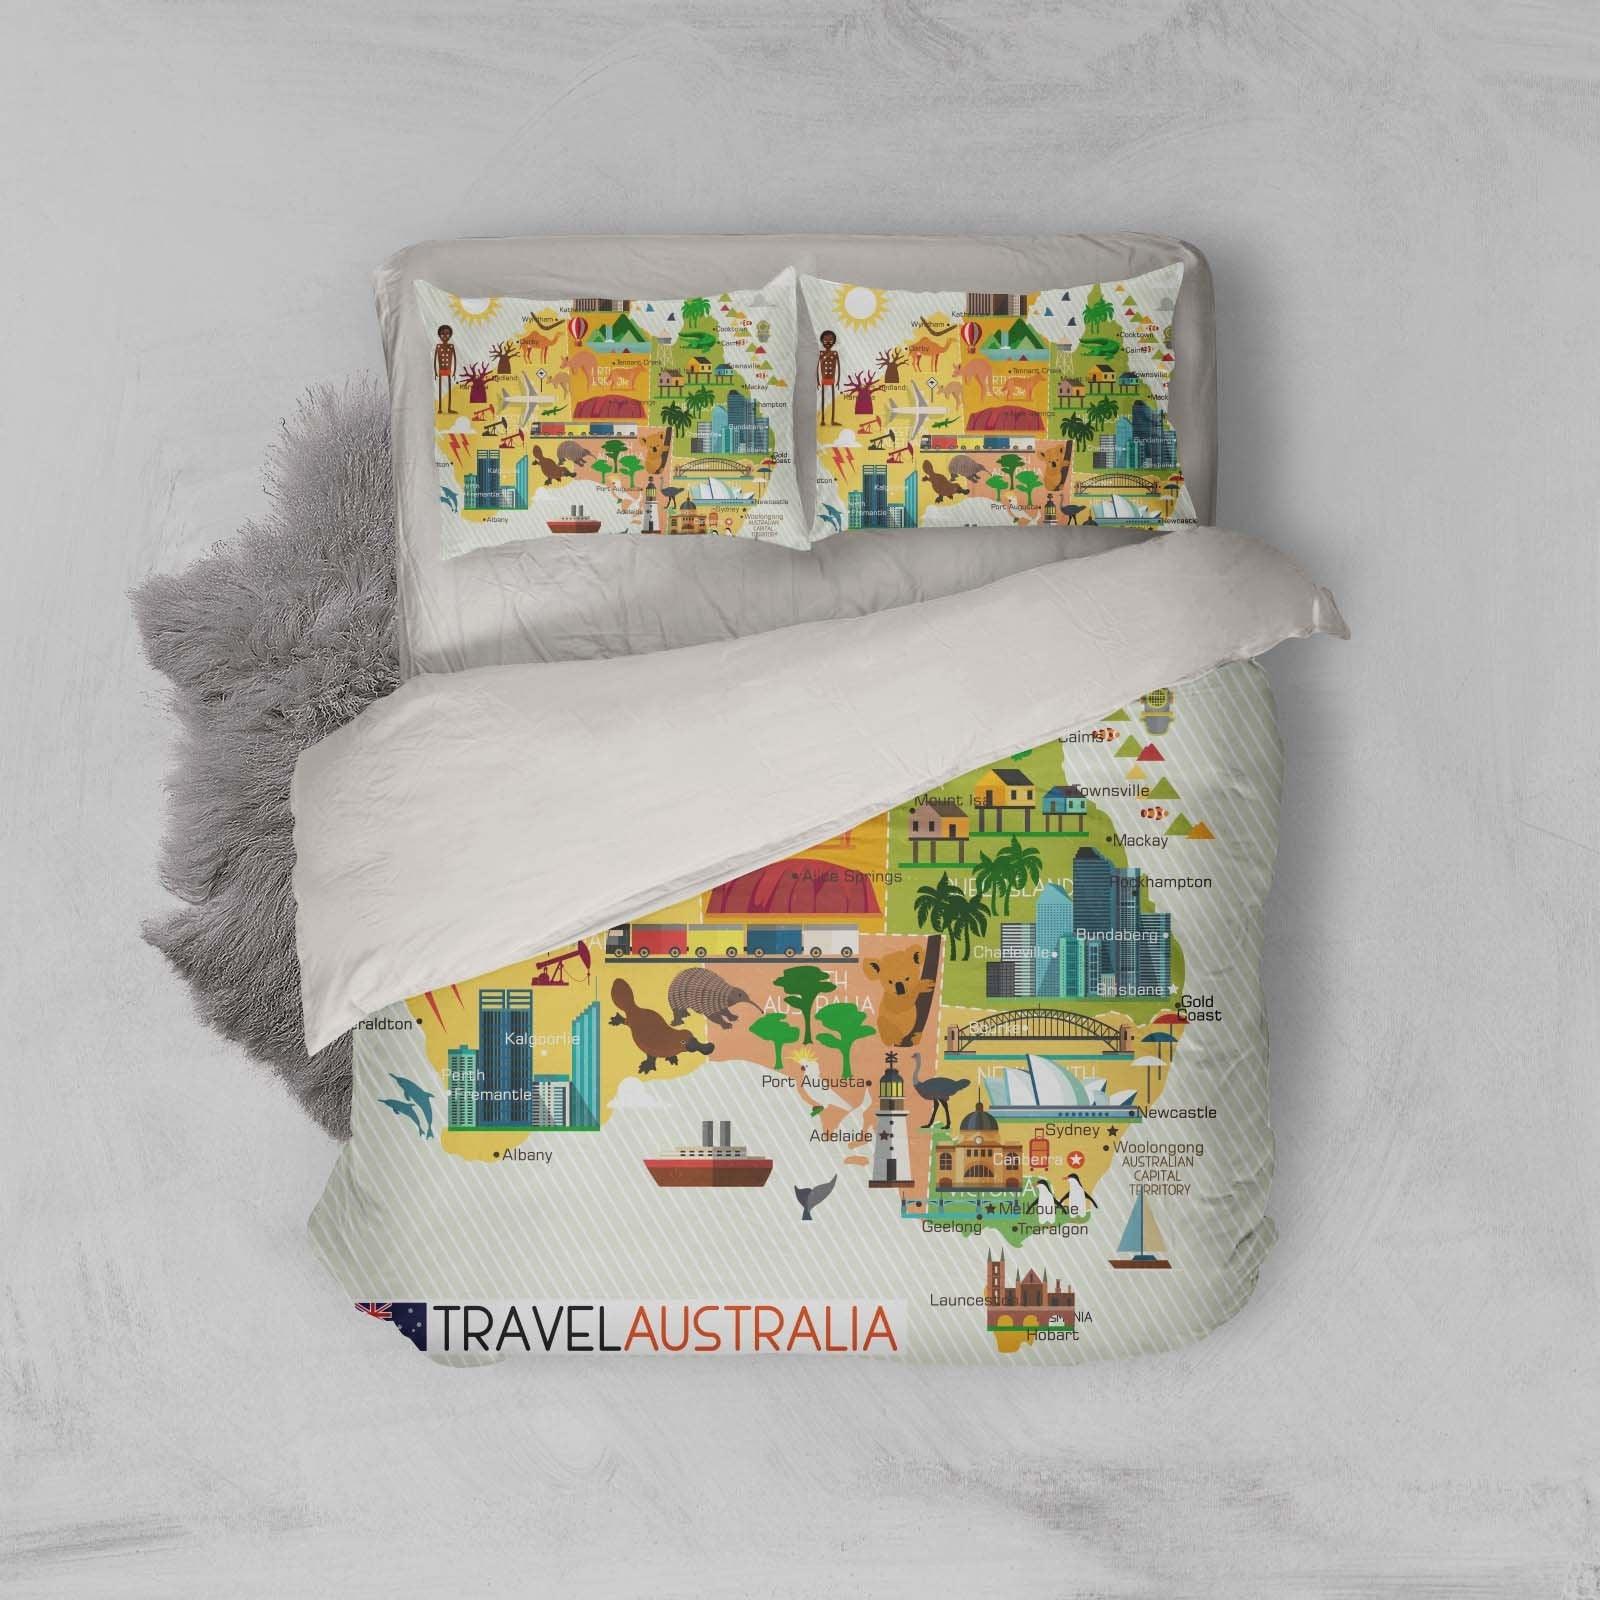 3D Cartoon, Map of Australia Bedding Set Quilt Cover Quilt Duvet Cover ,Pillowcases Personalized  Bedding,Queen, King ,Full, Double 3 Pcs- Jess Art Decoration